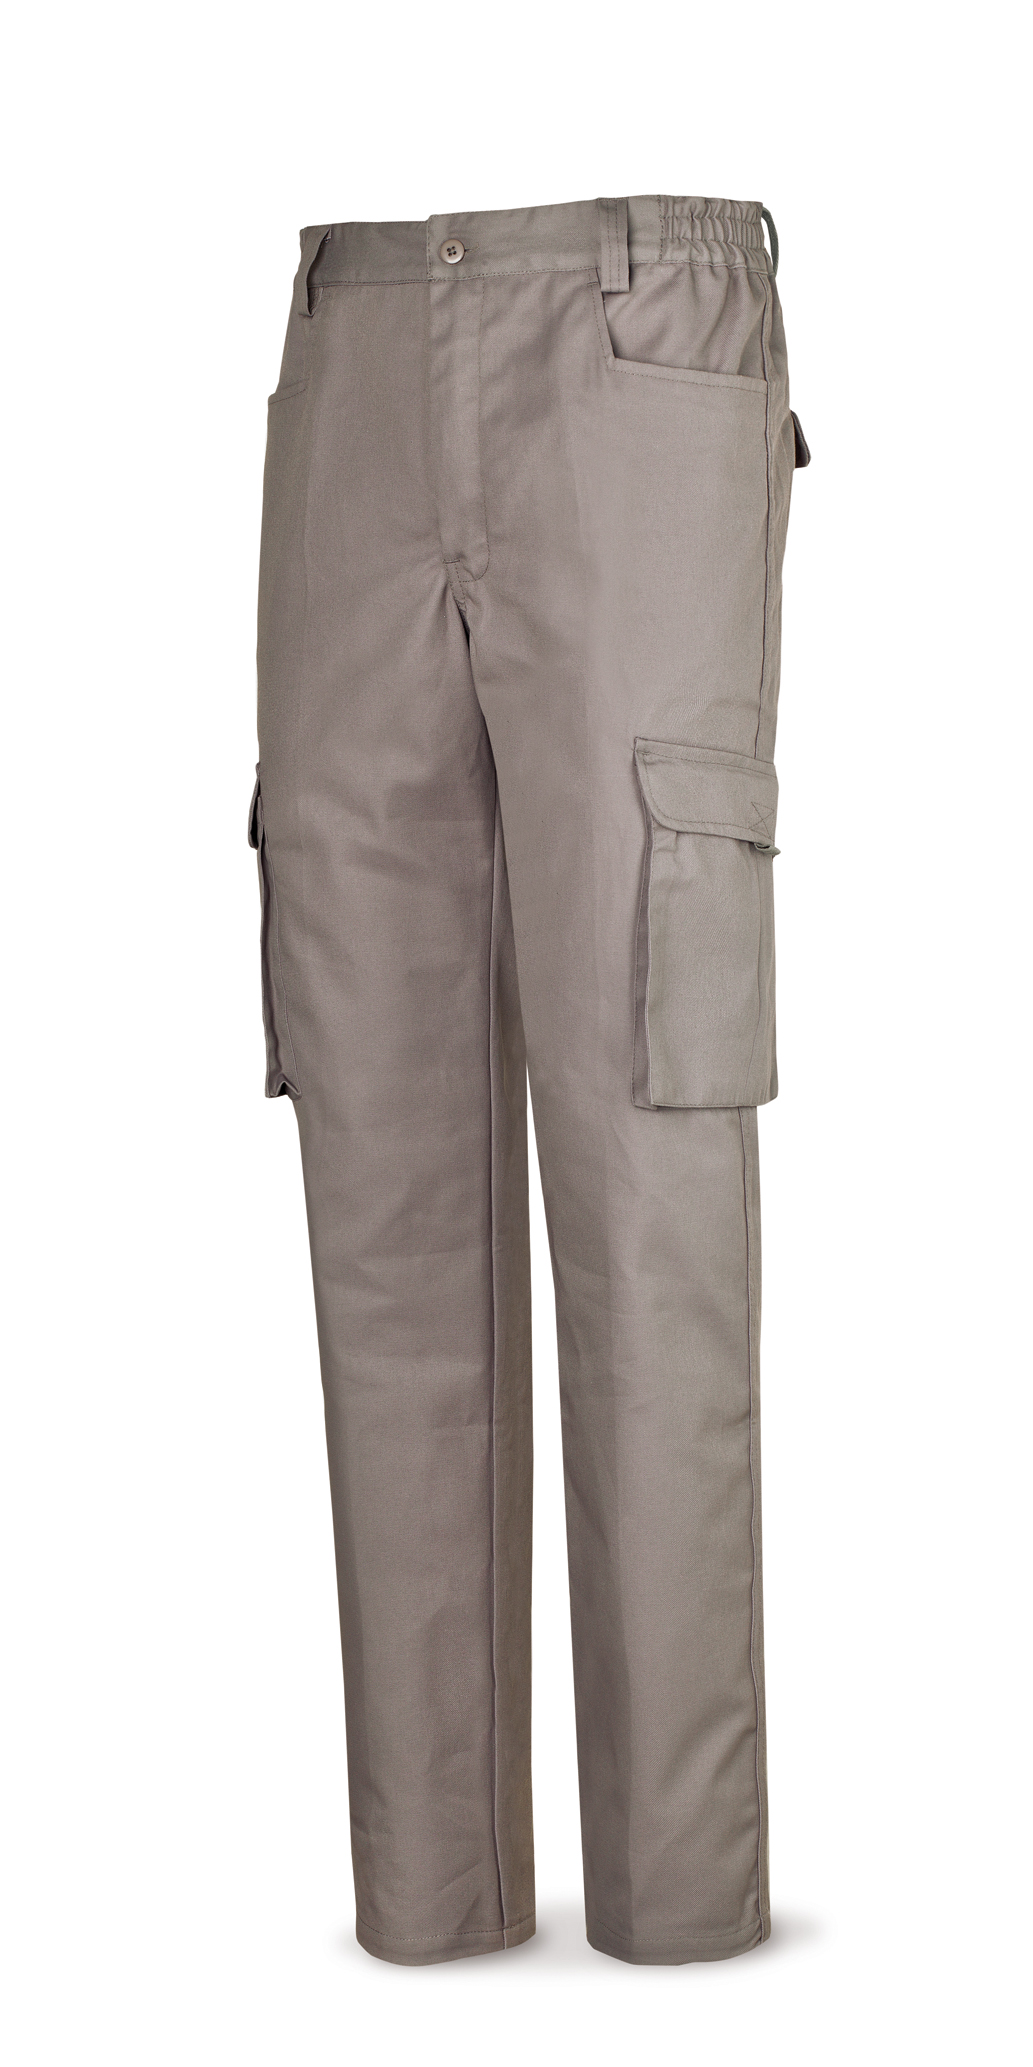 488-PTOPG Workwear Top Series 245 g cotton gray pants. Multi-pocket